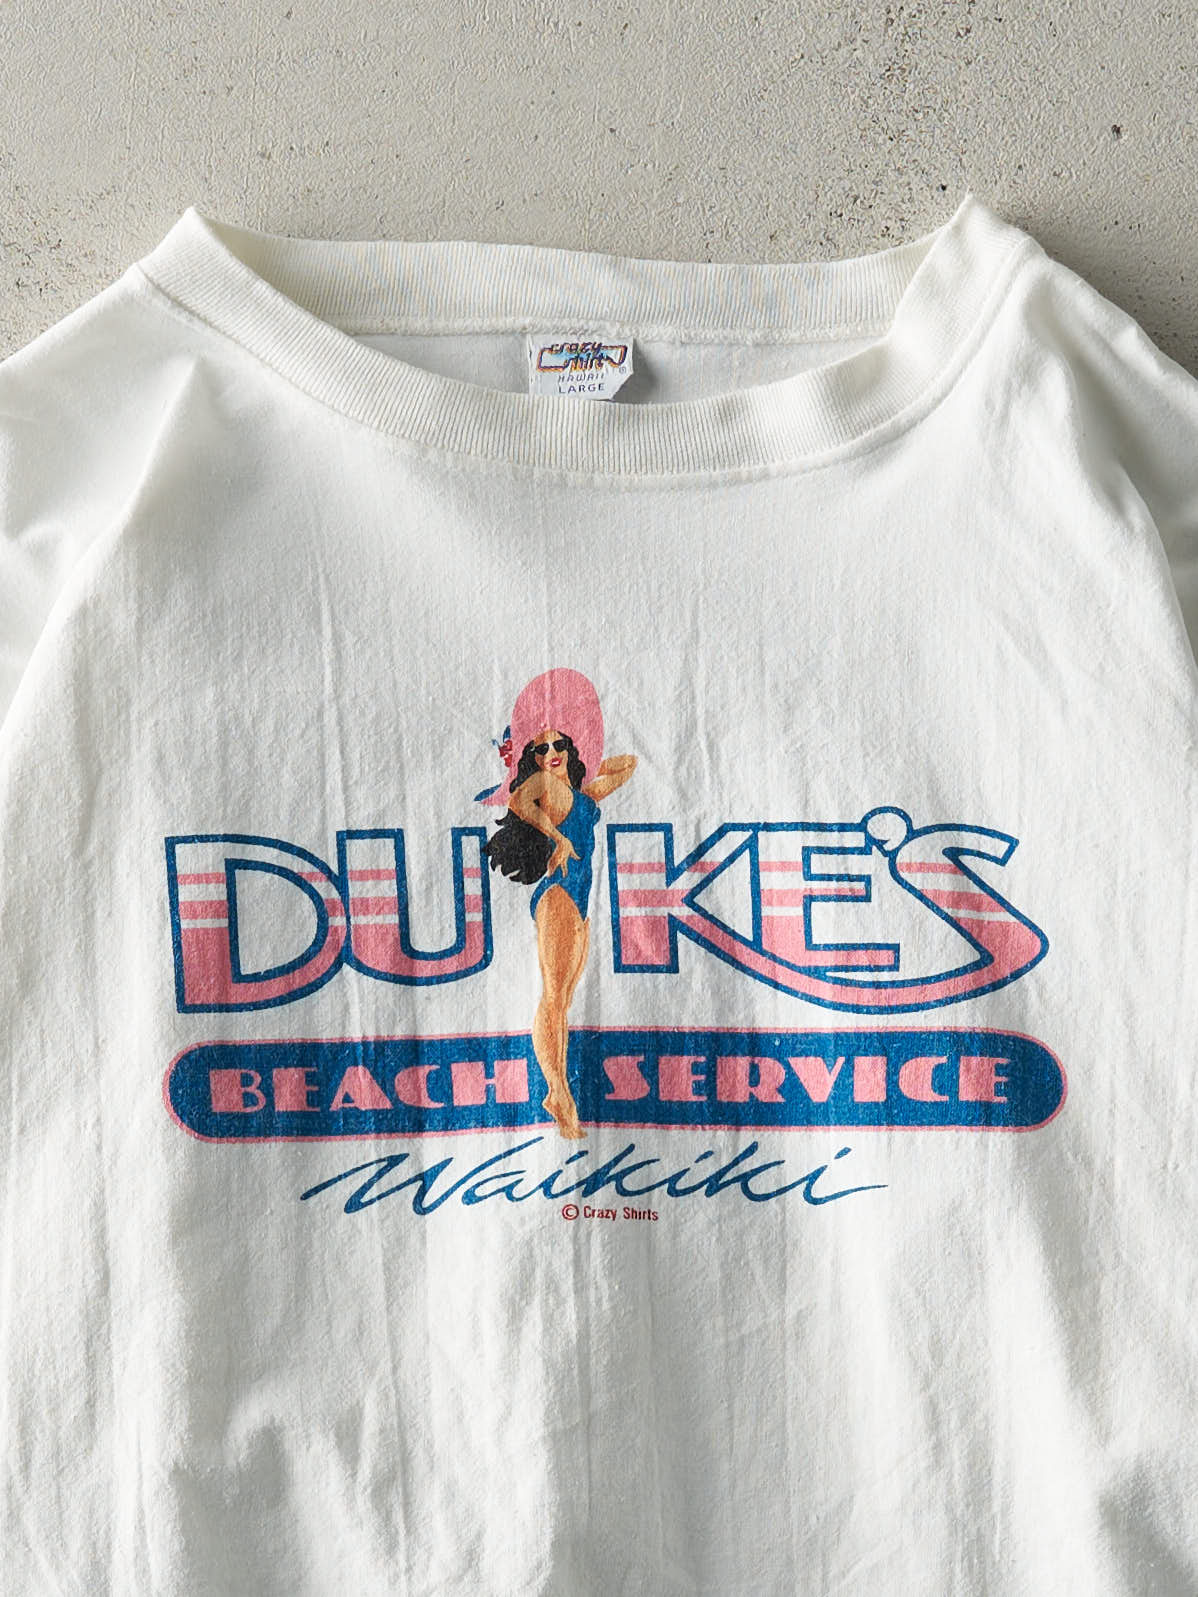 Vintage 90s White Dukes Beach Service Long Sleeve (L)